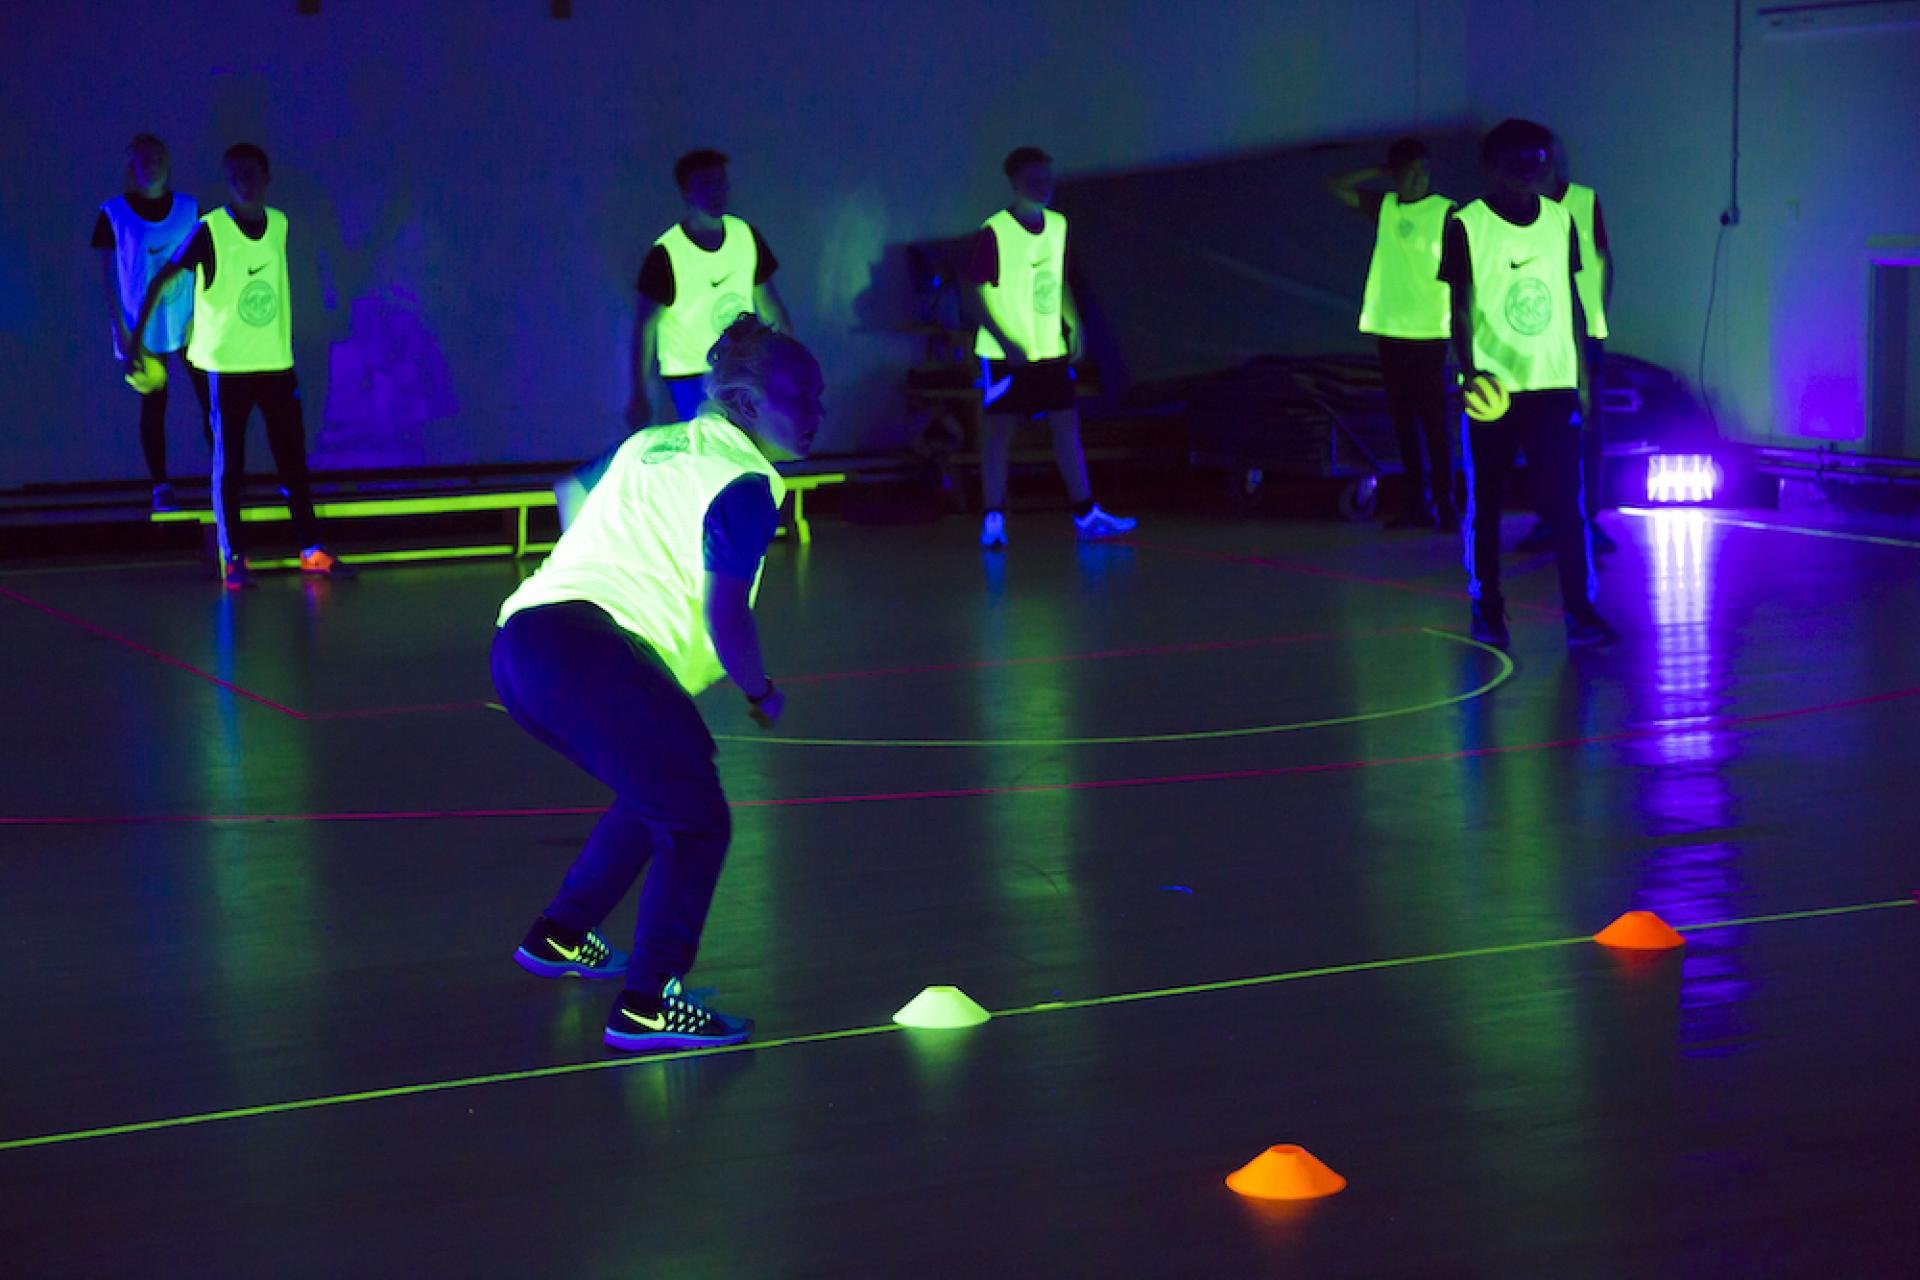 Glow in the dark voetbal, hockey en lasergamen